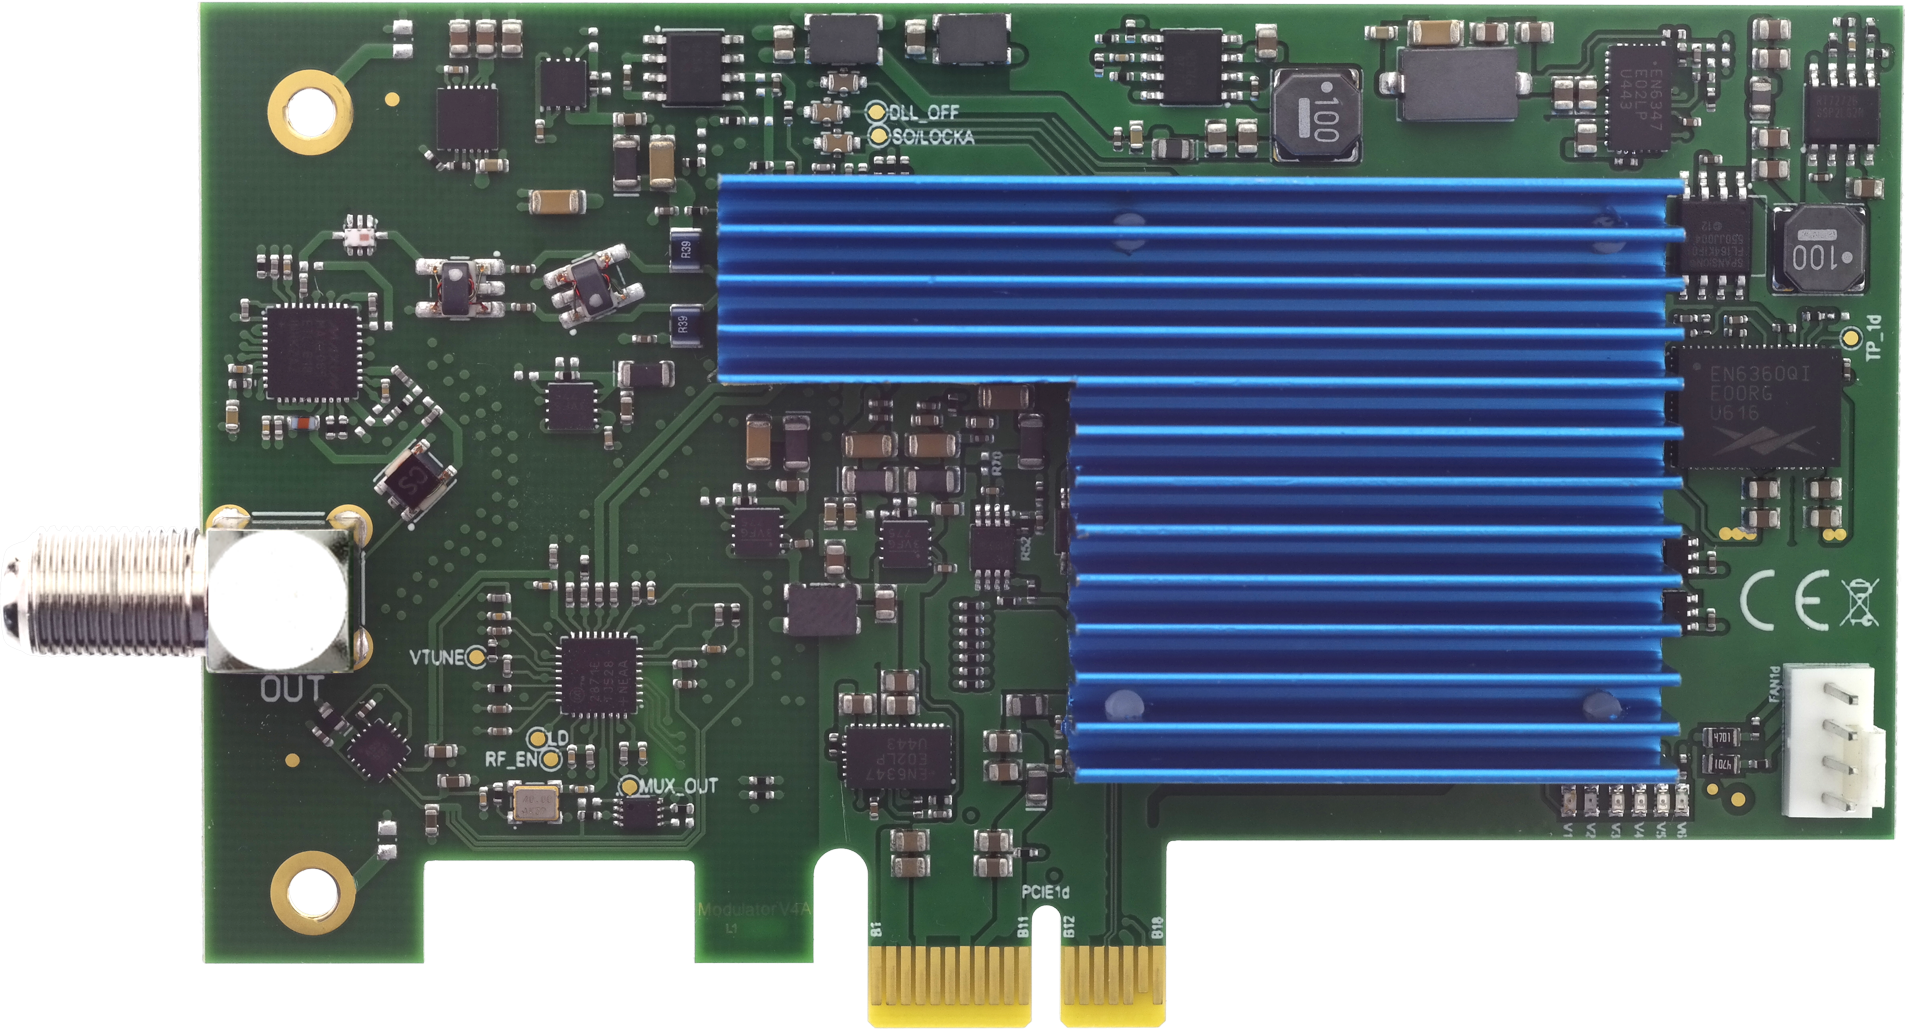 Digital Devices RESI DVB-C FSM 8 (V5) QAM Modulator Card - PCI Express